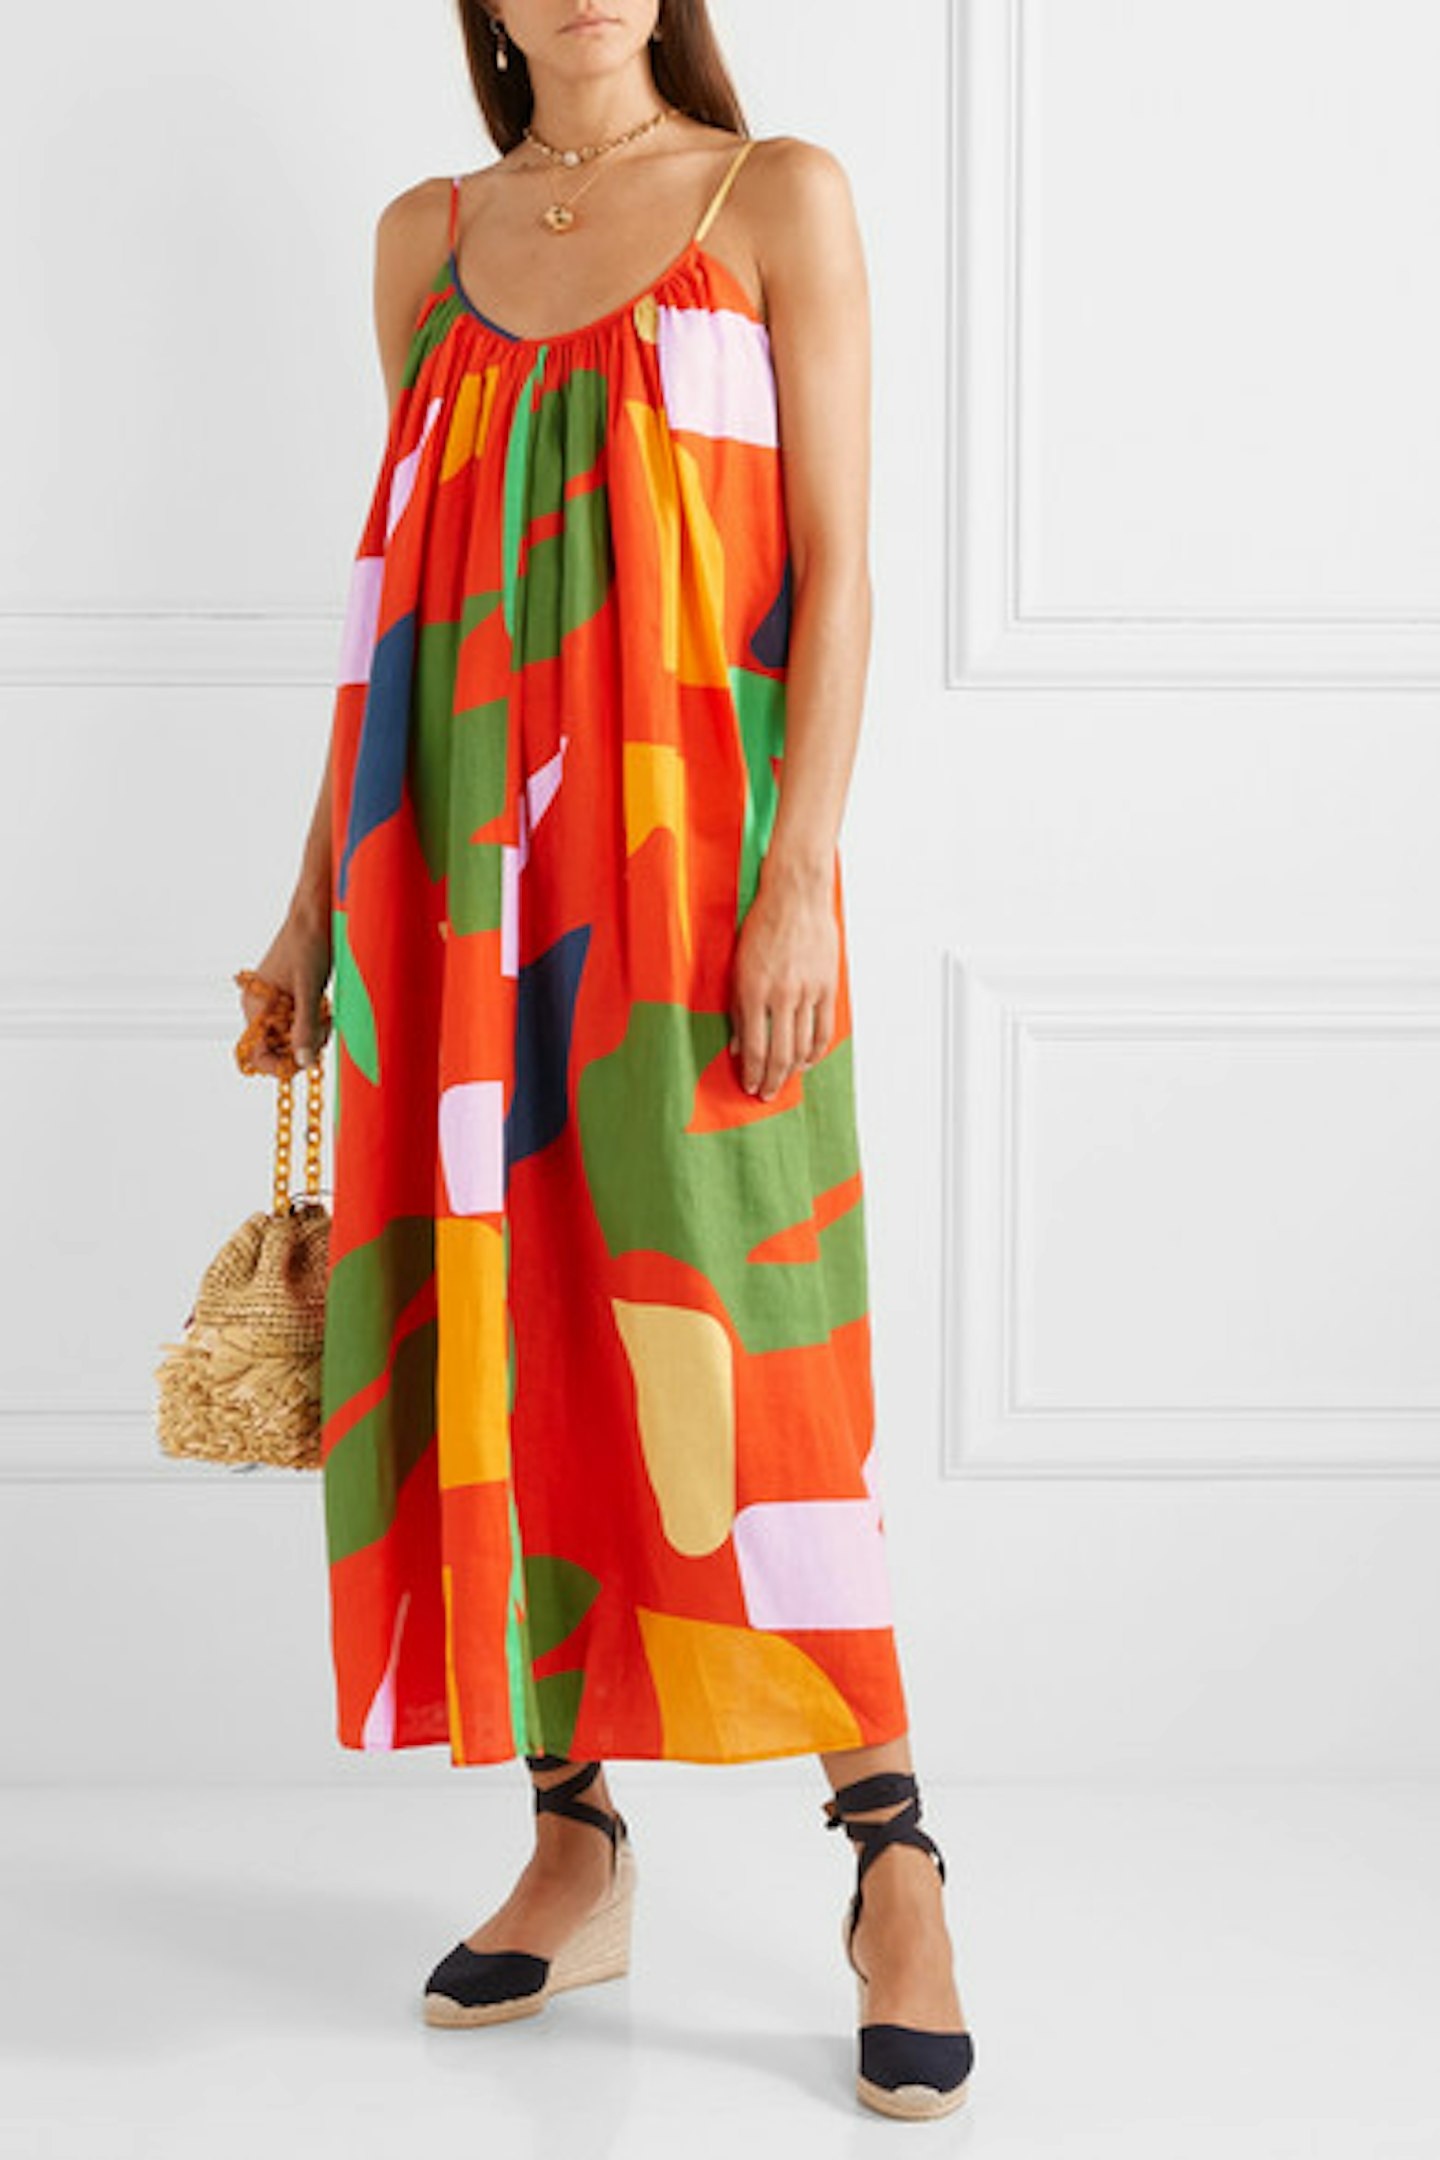 Mara Hoffman + Net Sustain, Printed Organic Linen Maxi Dress, £390